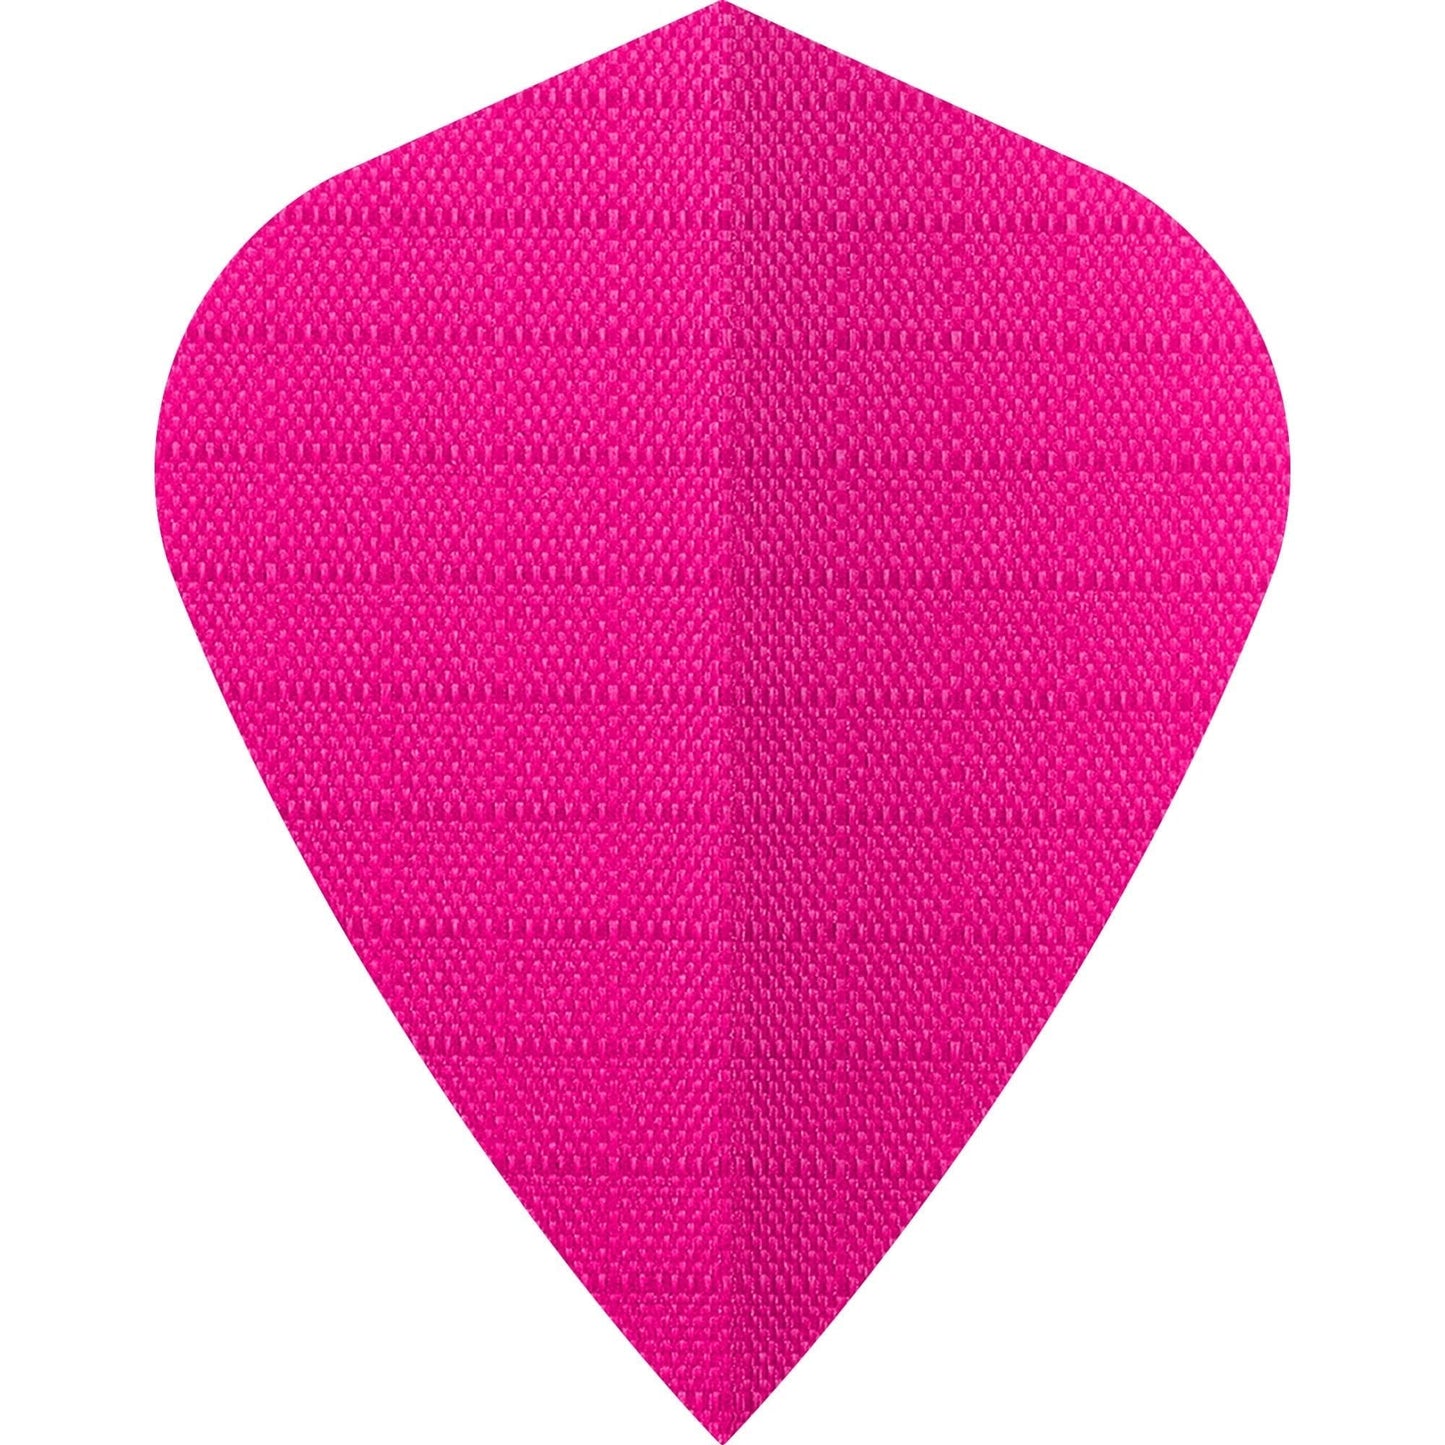 *Designa Dart Flights - Fabric Rip Stop Nylon - Longlife - Kite Fluro Pink